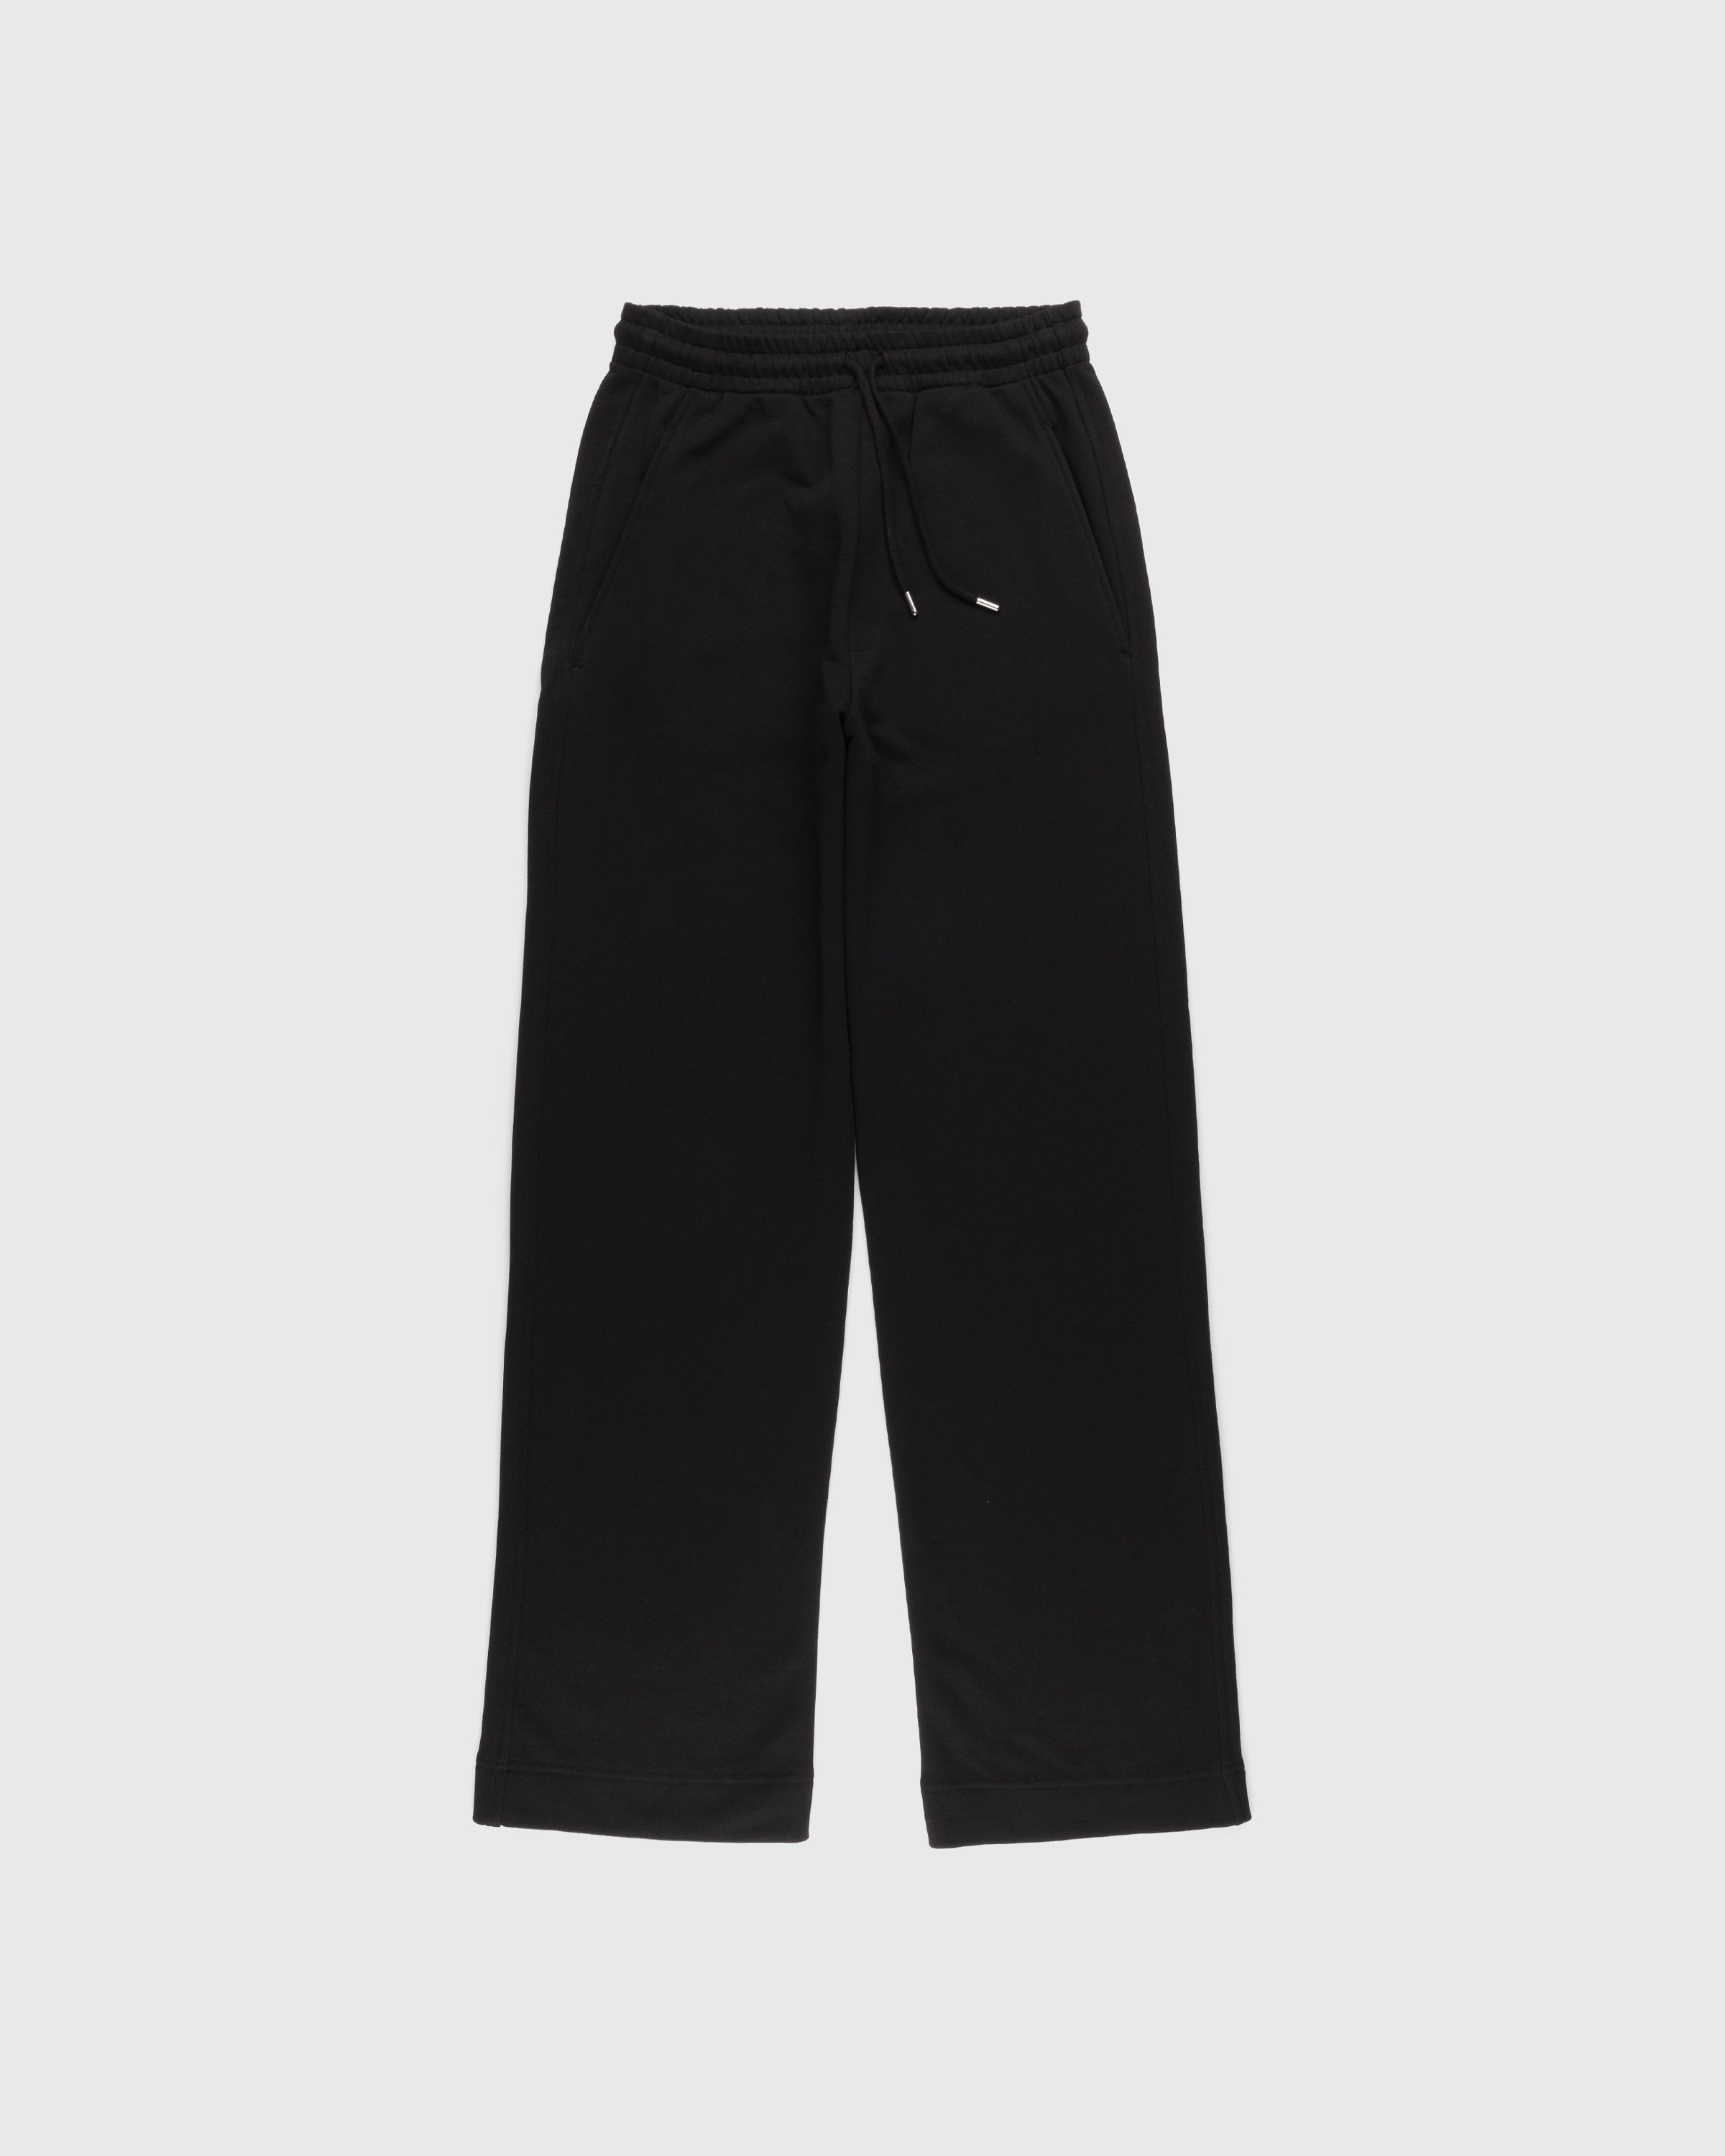 Dries van Noten – Hamer Sweatpants Black | Highsnobiety Shop